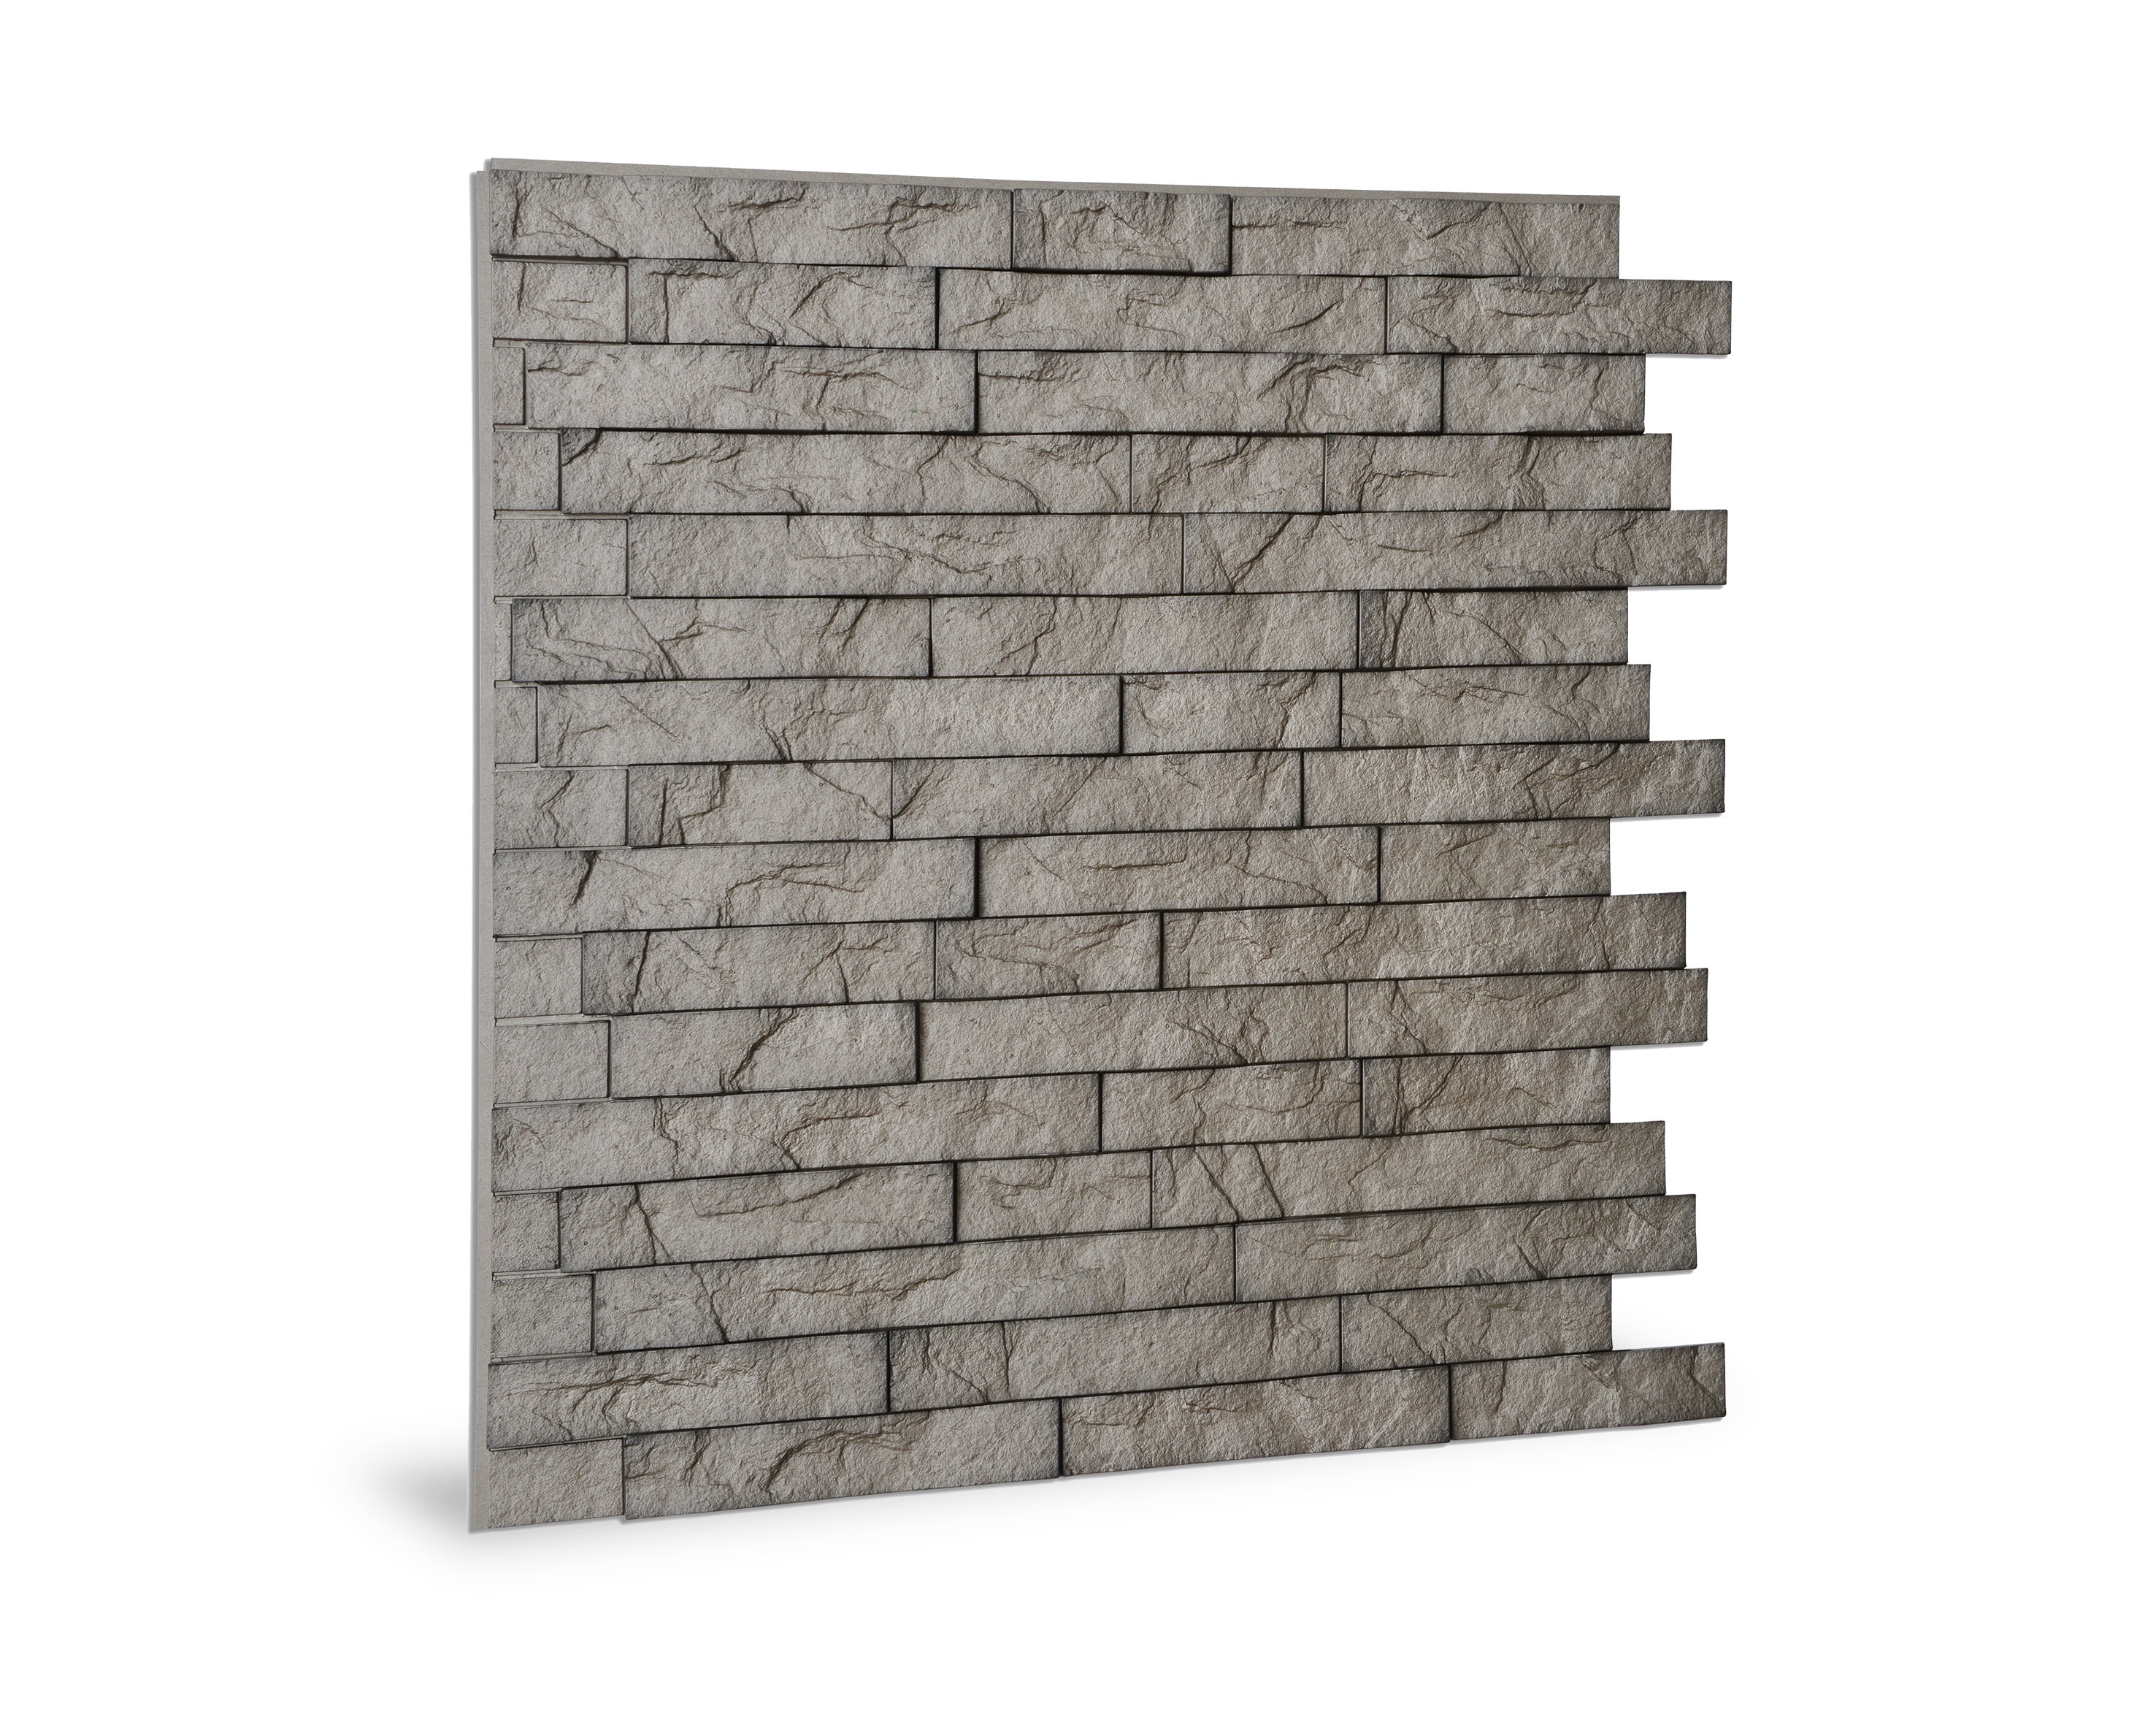 Set of 4 concrete wall cladding plastic garden mould brick interlocking tiles 